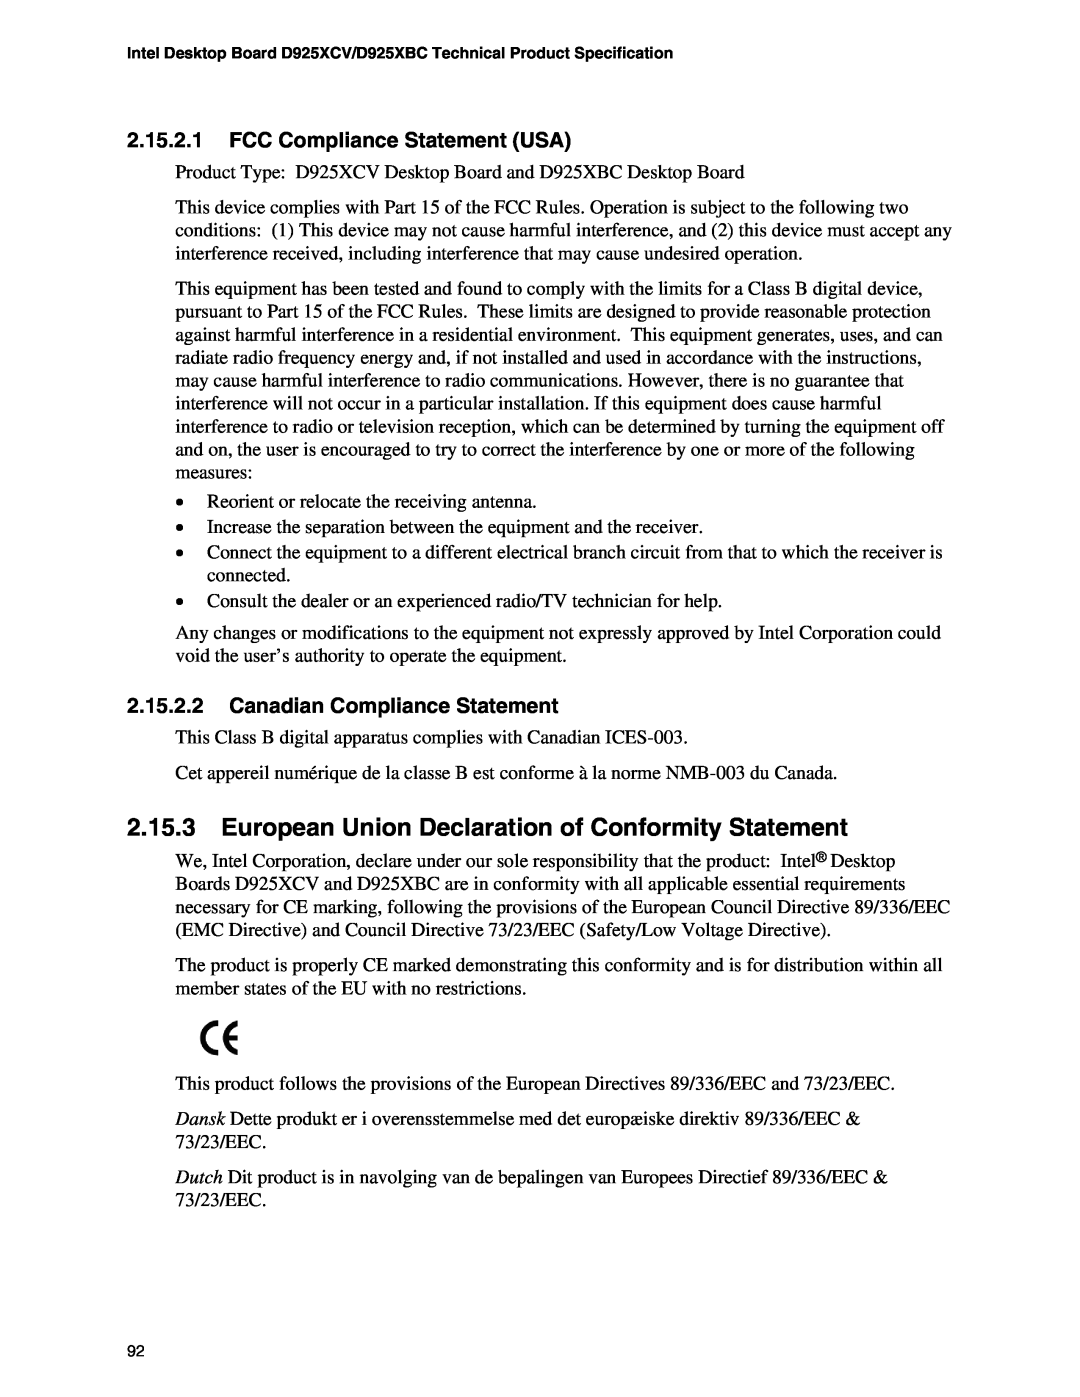 Intel D925XCV, D925XBC specifications European Union Declaration of Conformity Statement, FCC Compliance Statement USA 